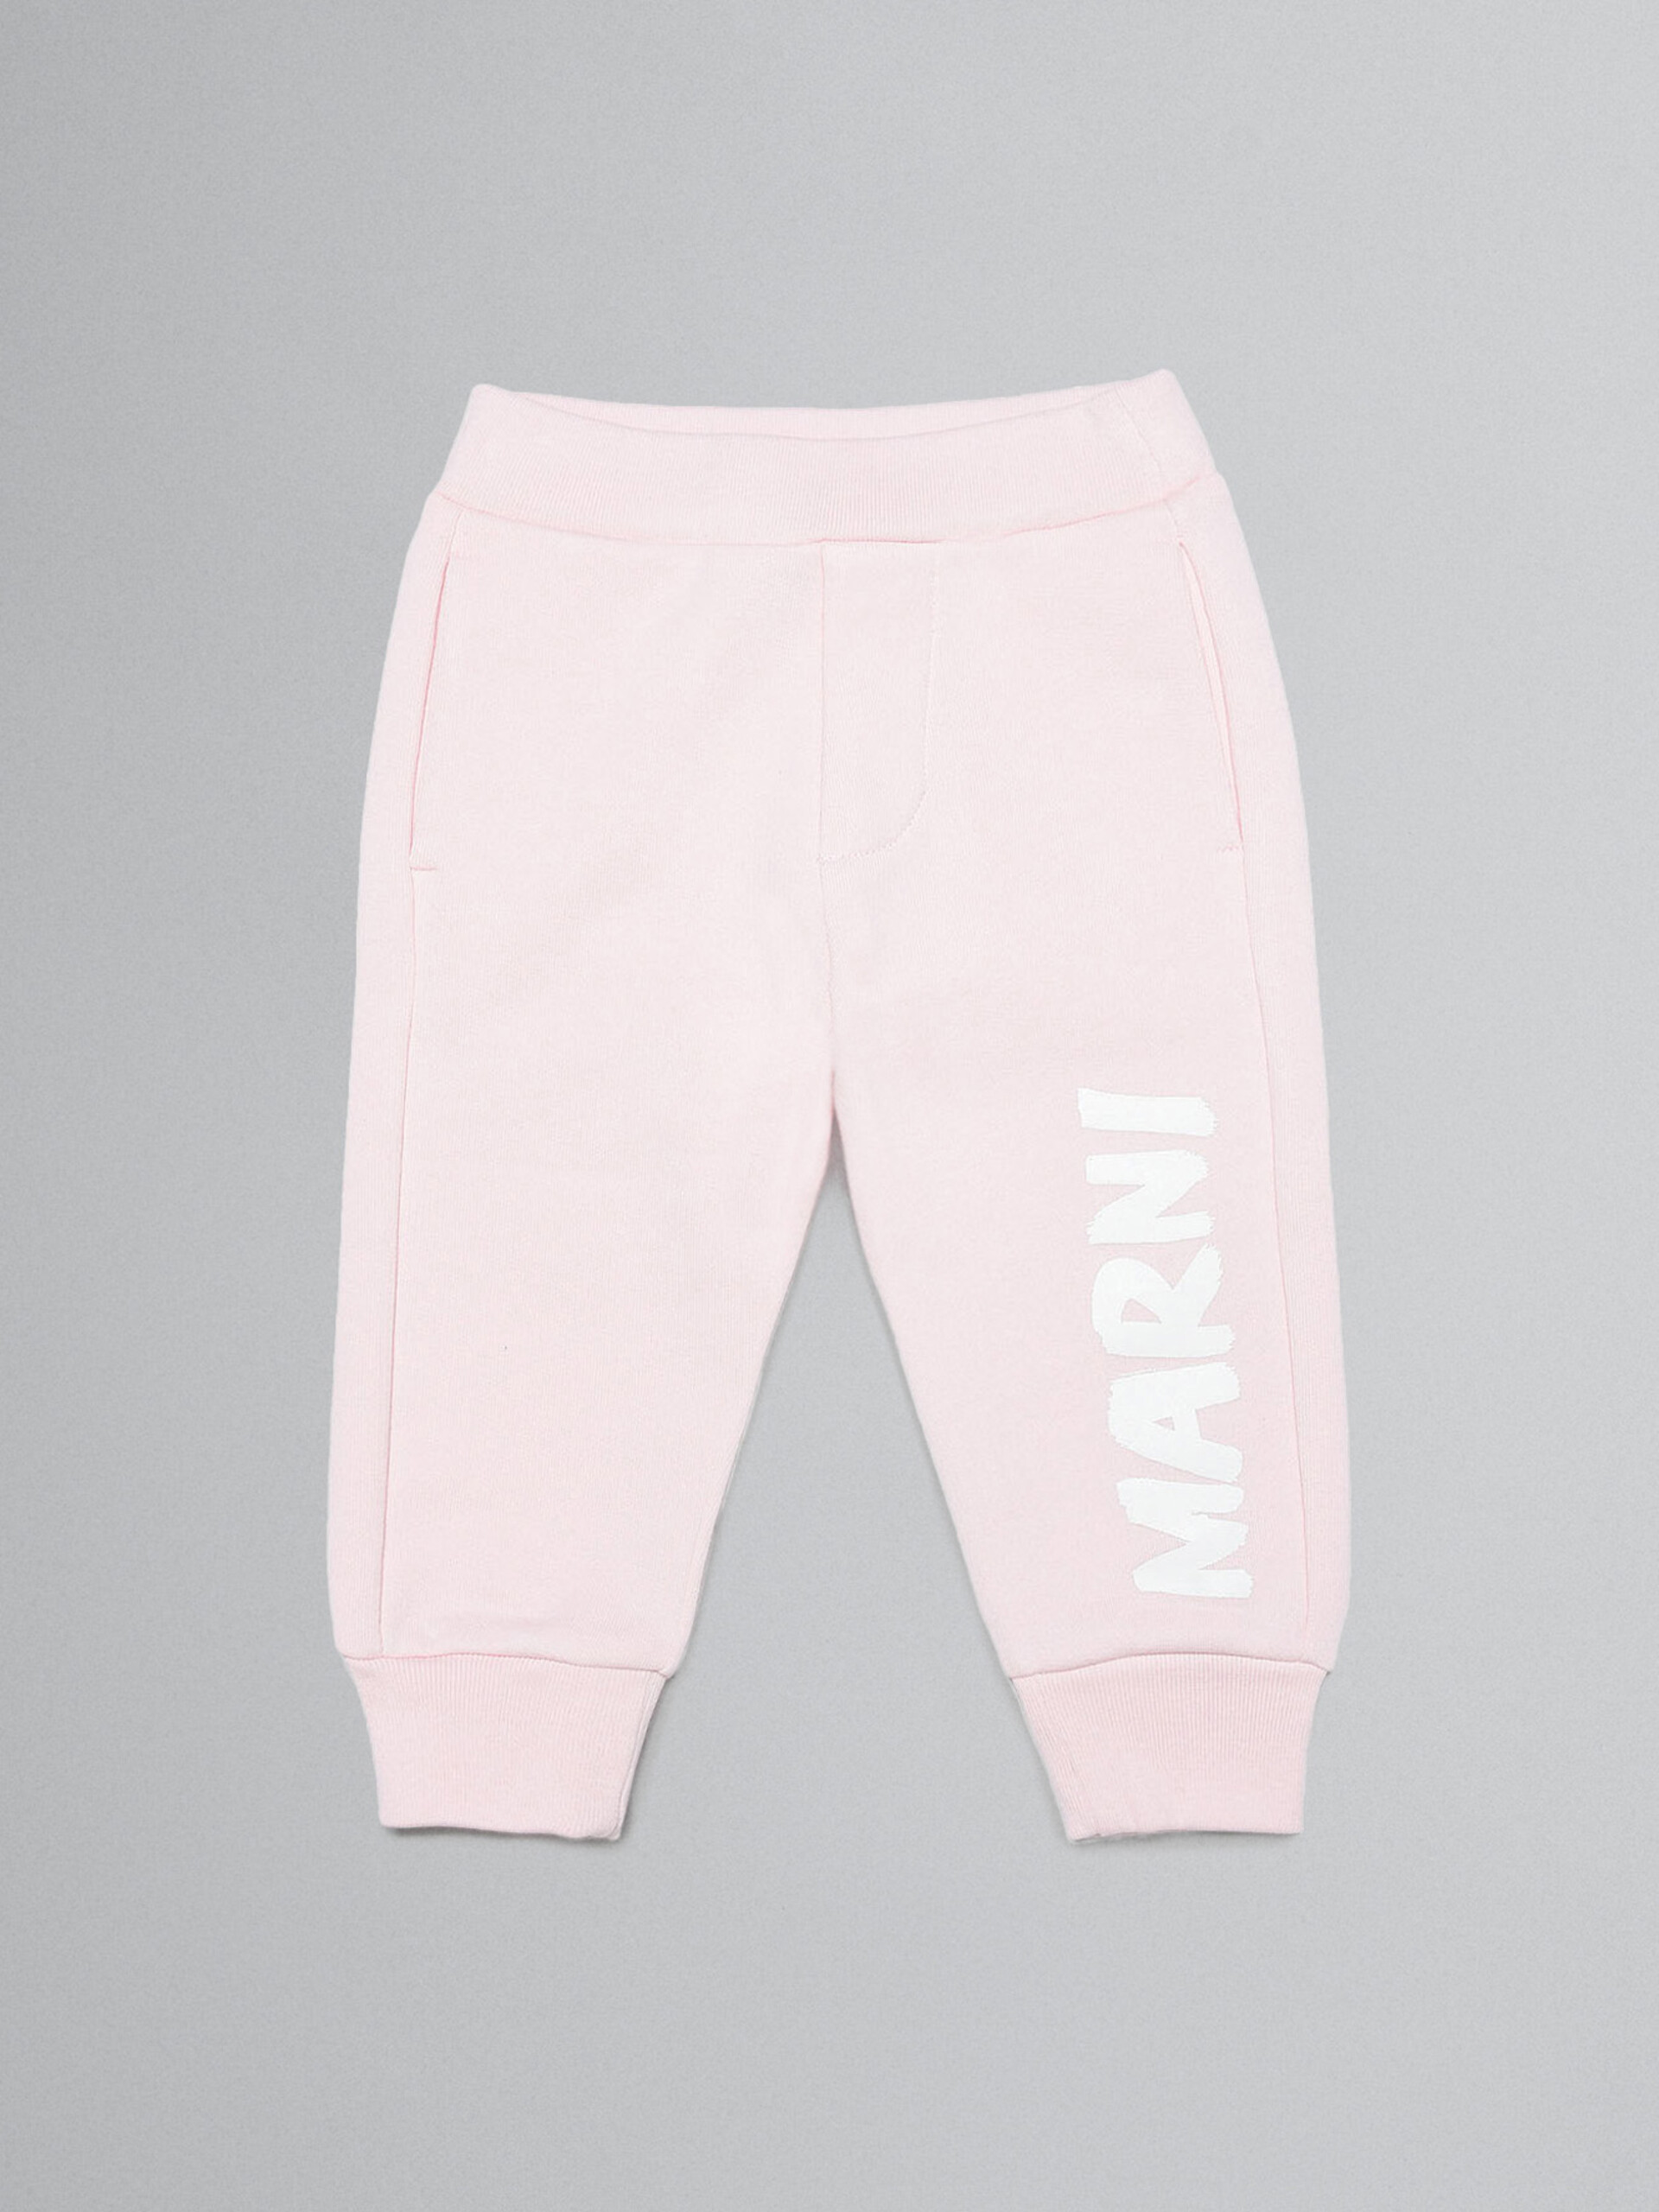 Ballet pink track pants with "Marni" print - Pants - Image 1